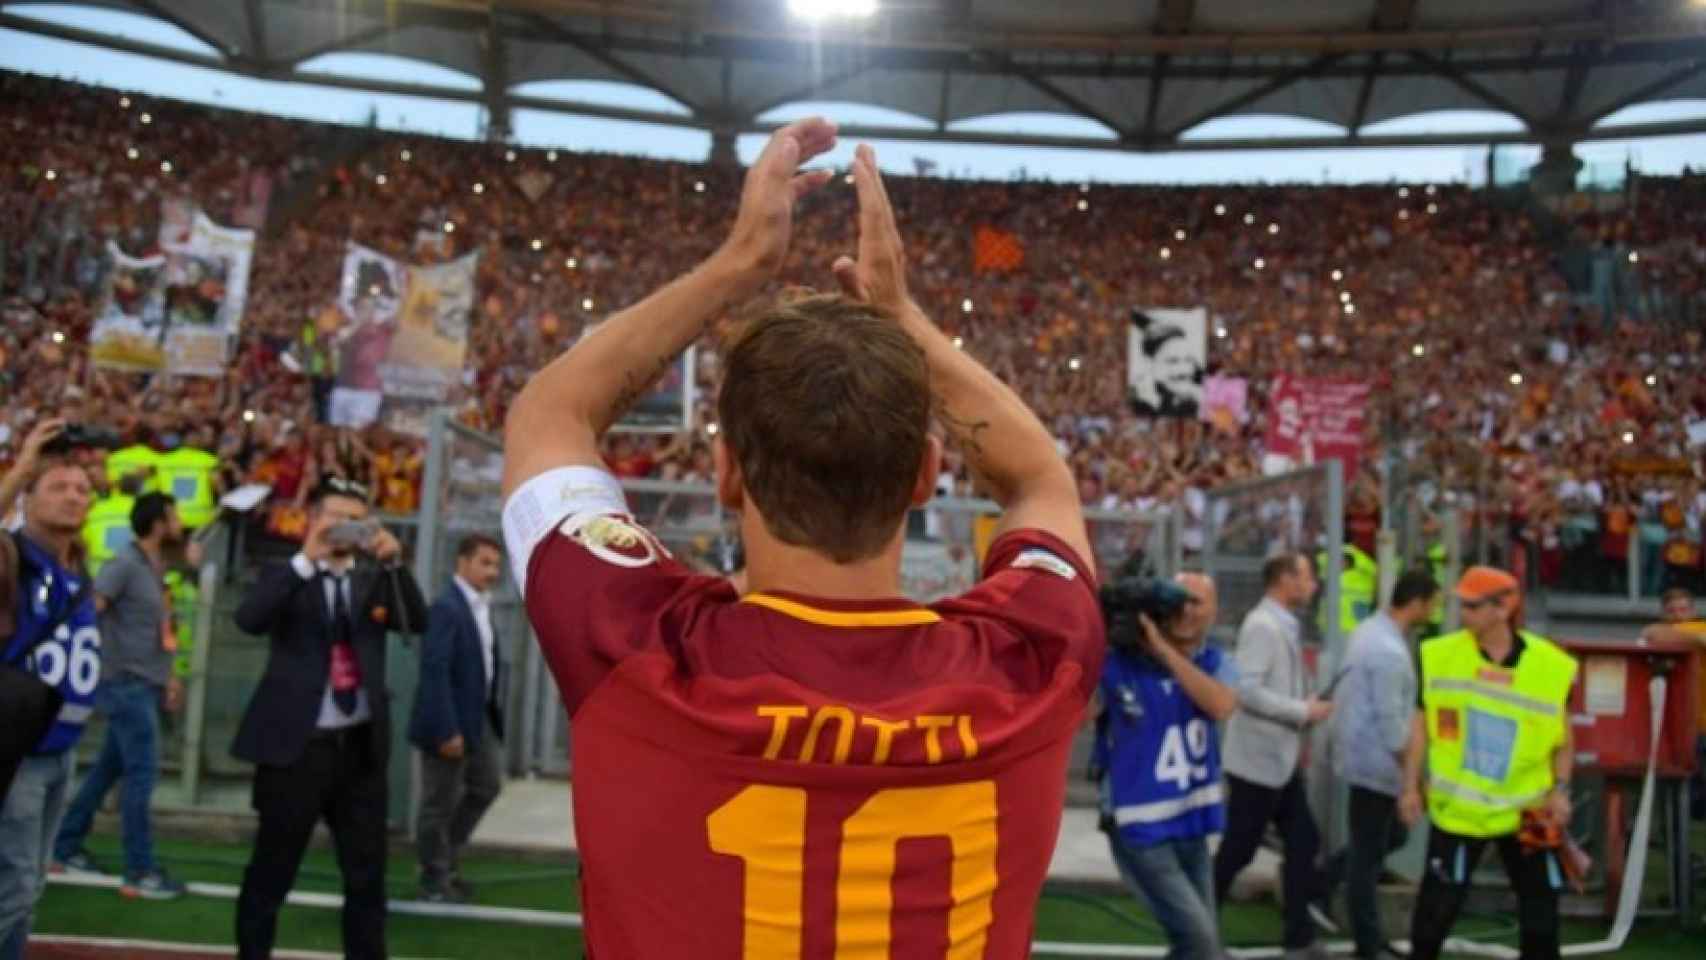 Totti en su despedida. Foto: @officialASroma